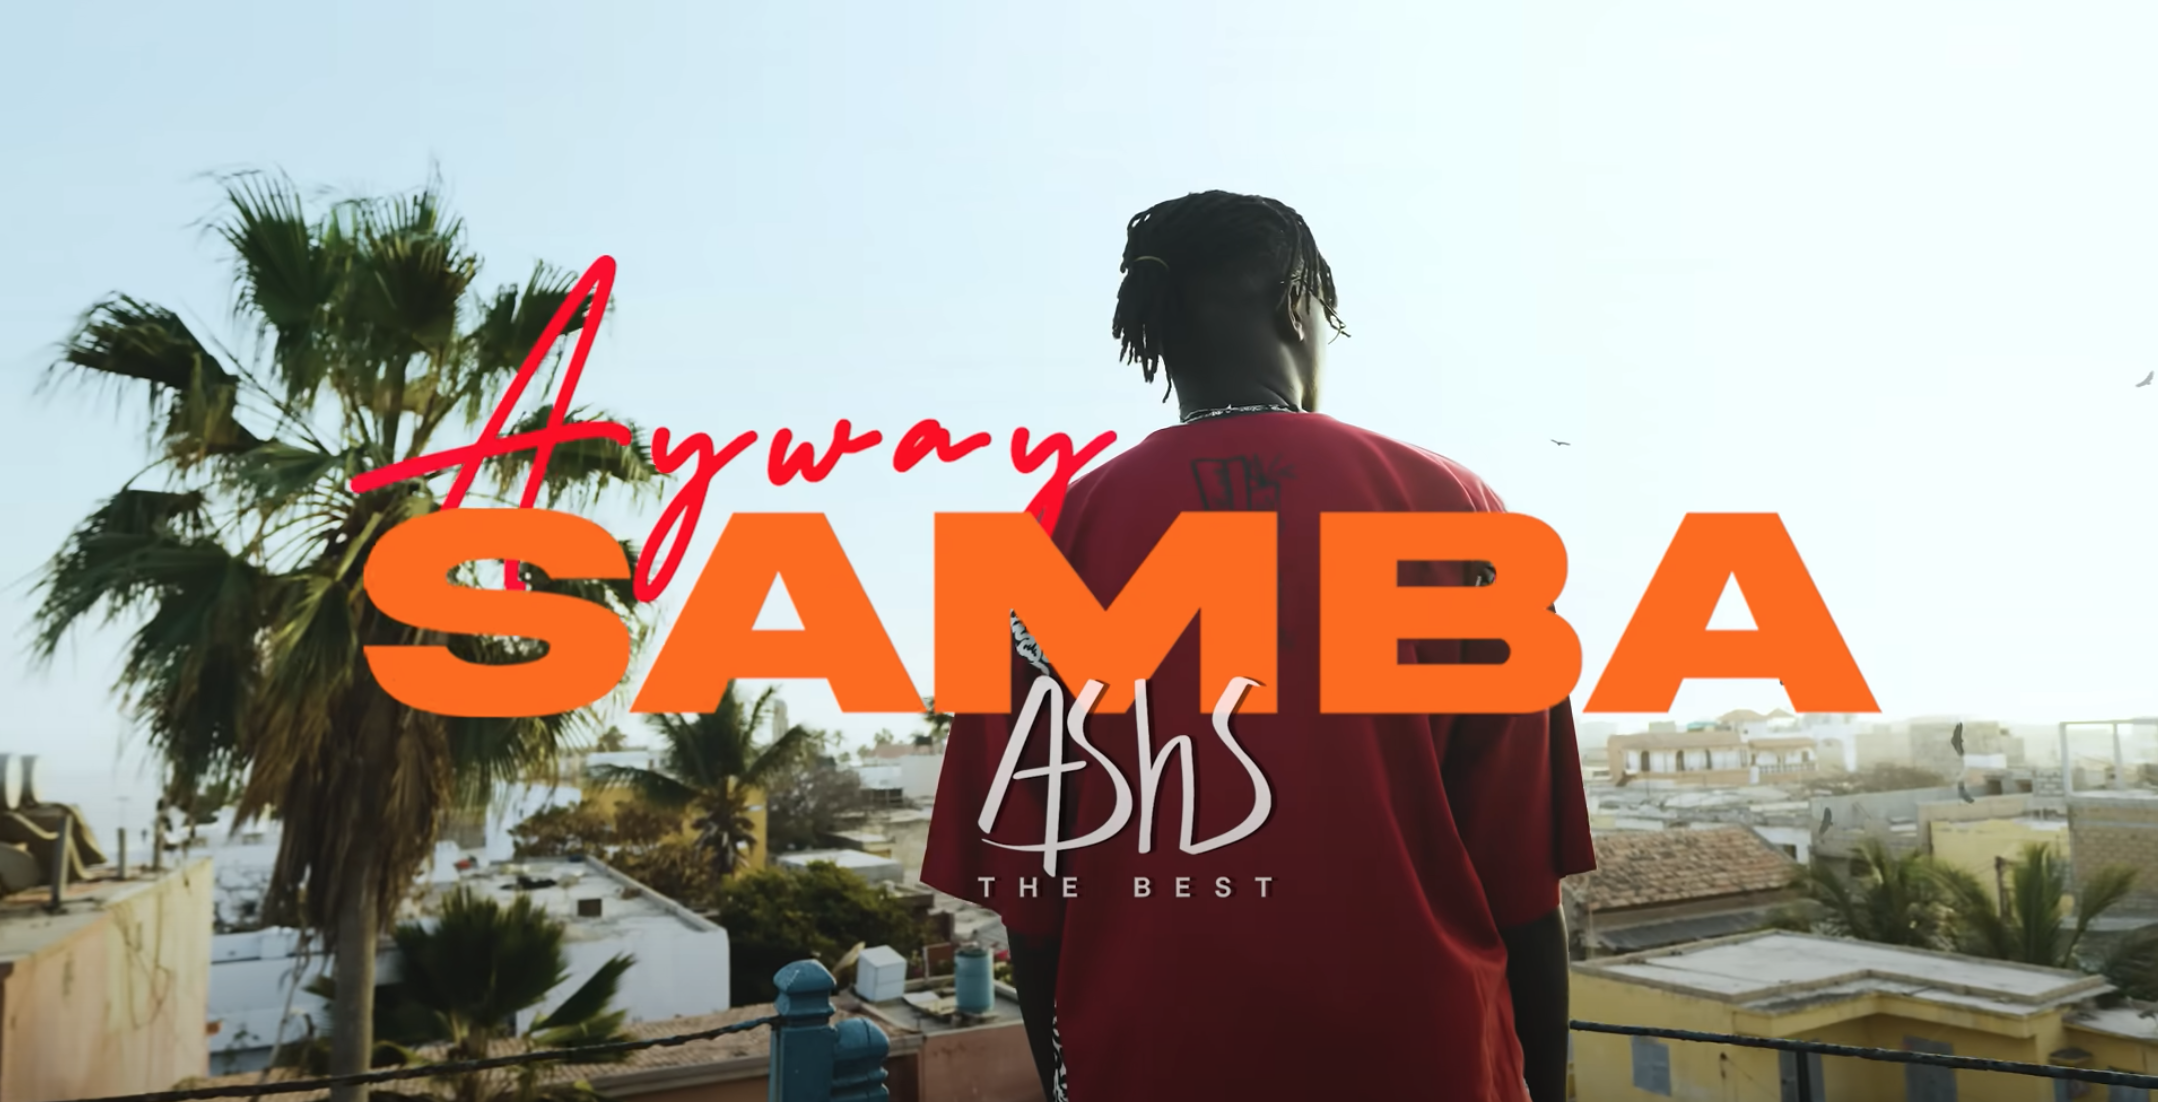 Ashs The Best - Ayway Samba (Clip Officiel)